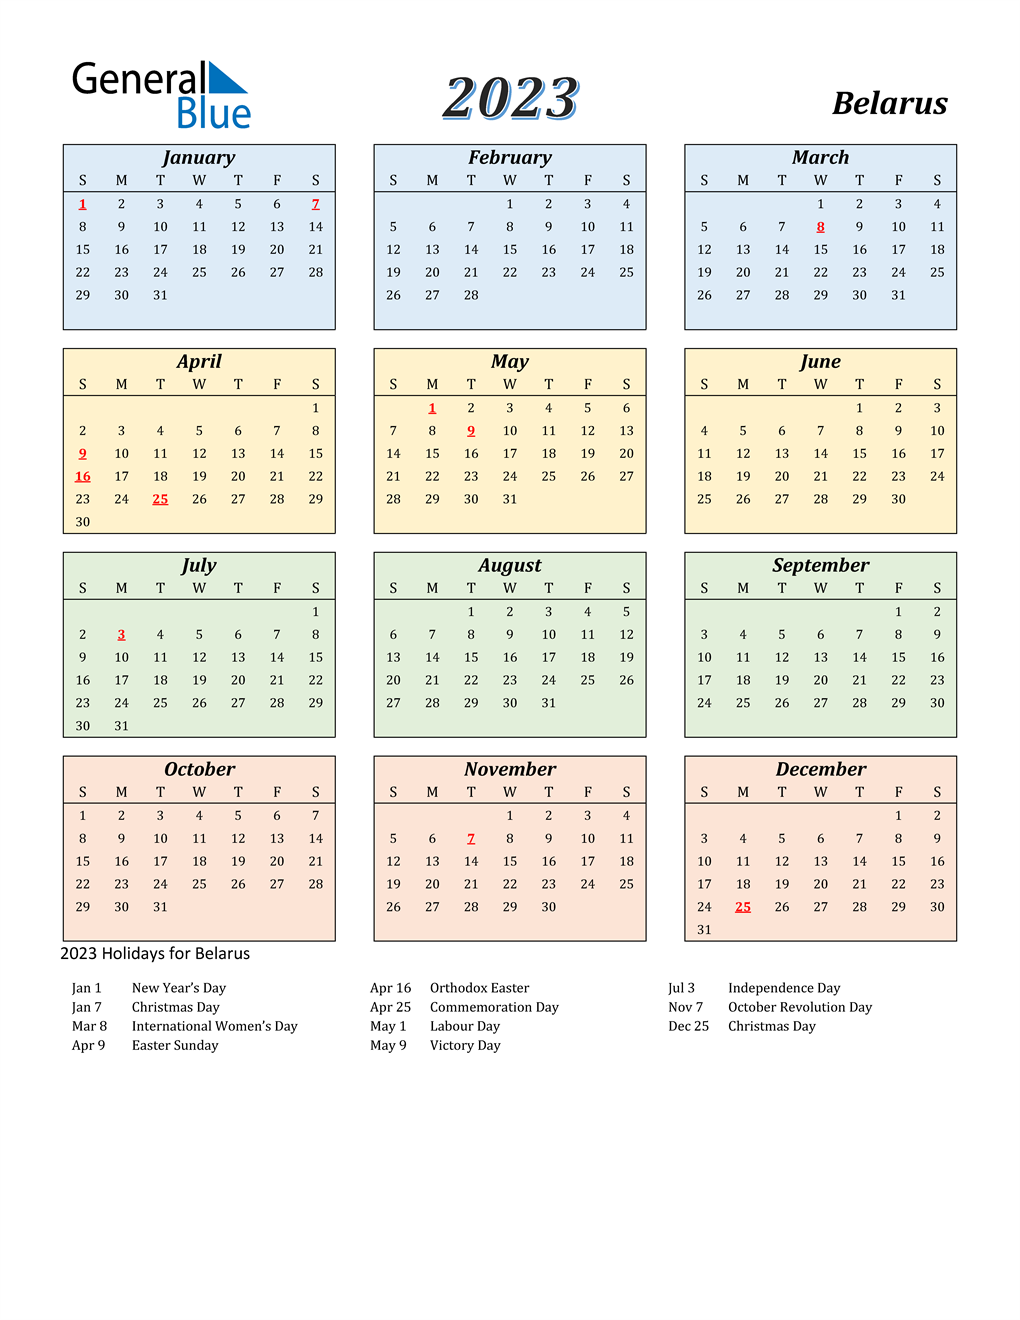 Ysu Spring 2023 Calendar 2023 Belarus Calendar With Holidays